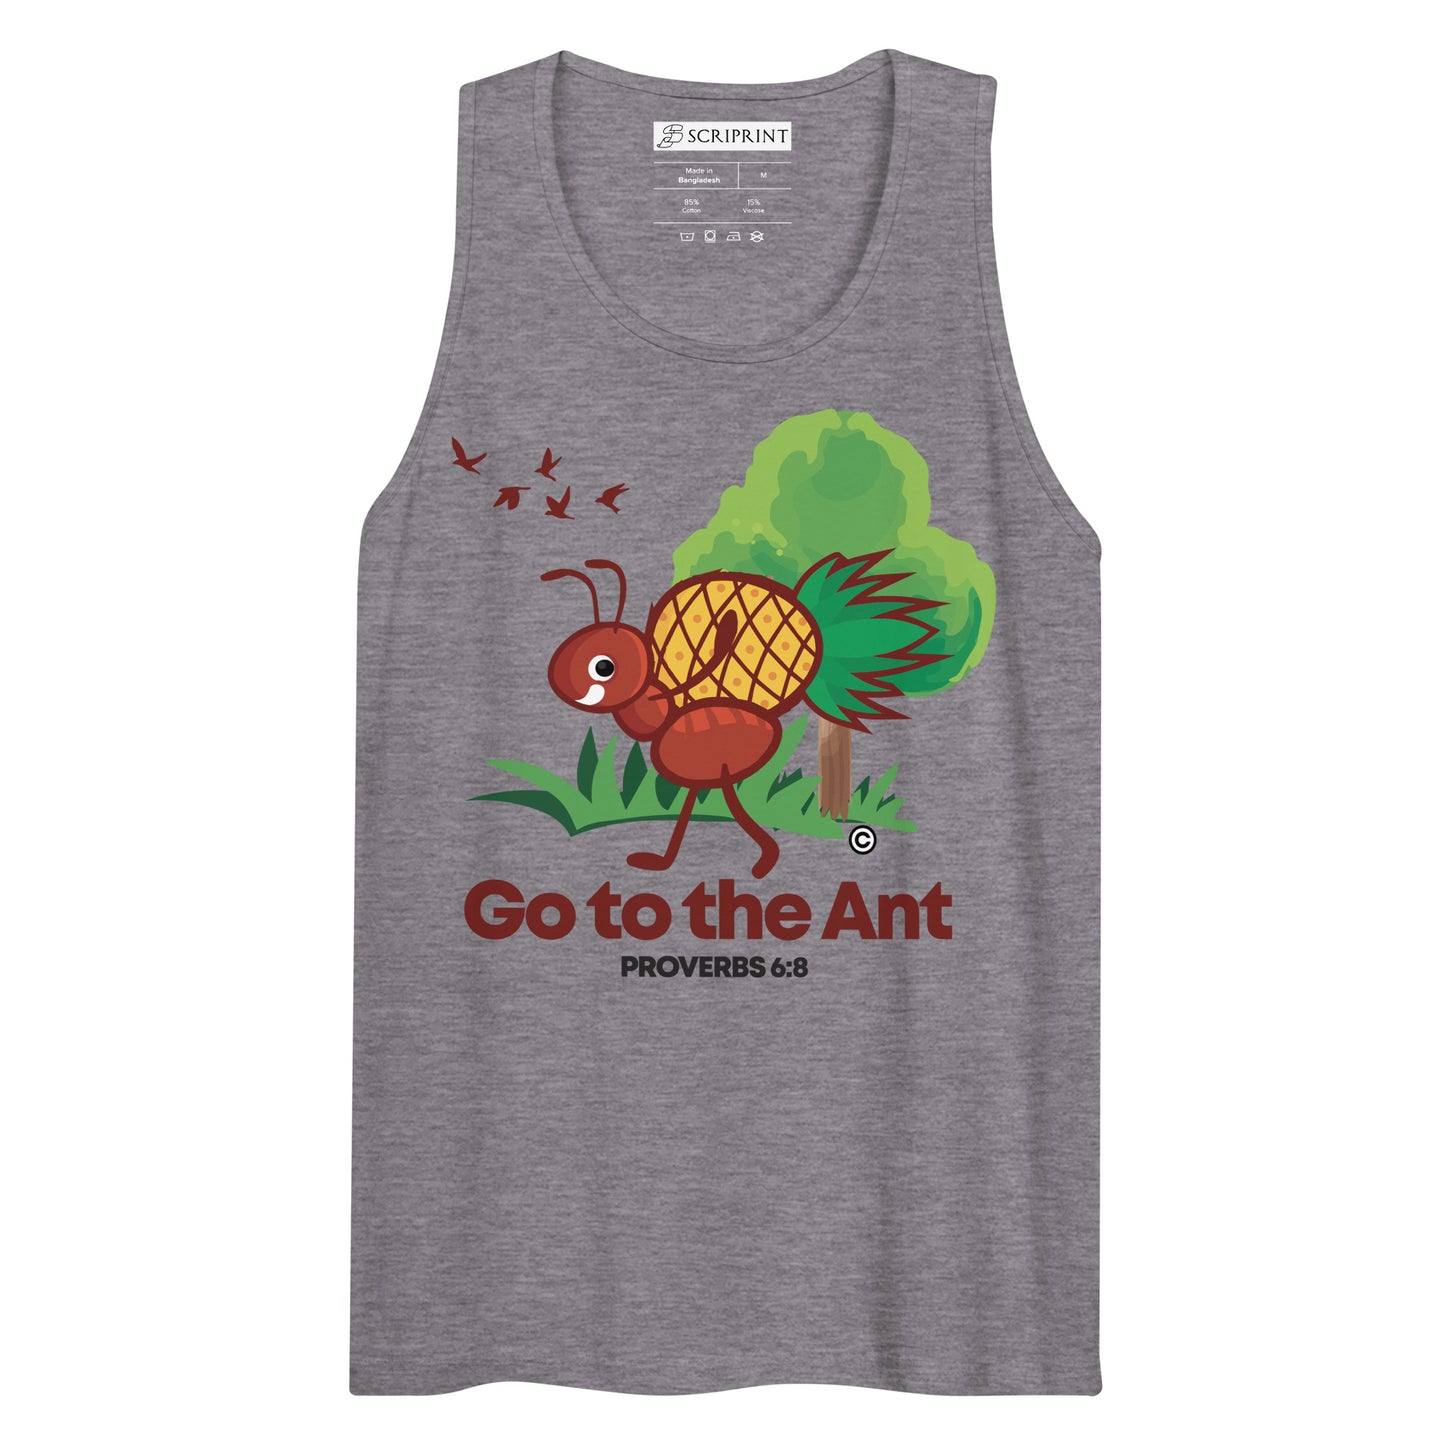 Go to the Ant Men’s Premium Tank Top